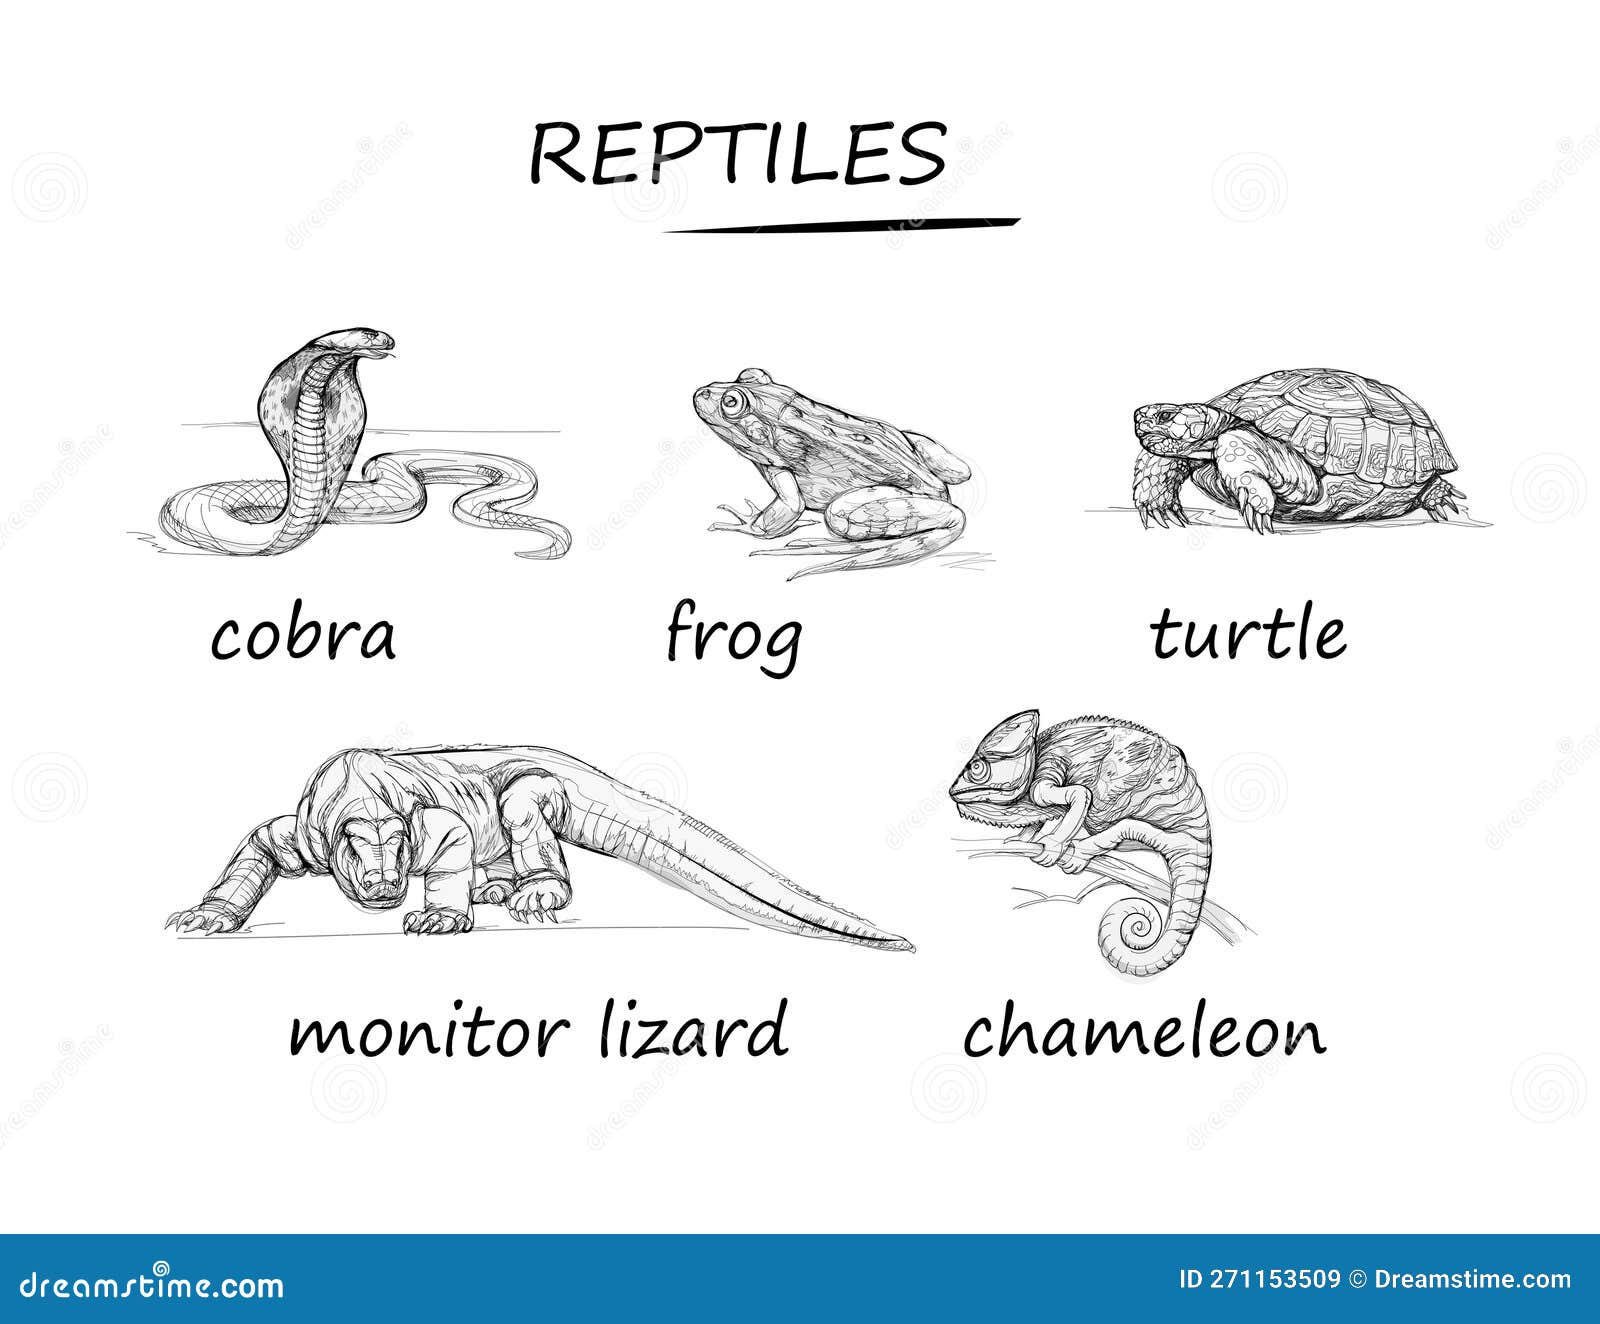 Reptiles Drawing Tutorials - Step by Step : DrawingTutorials101.com